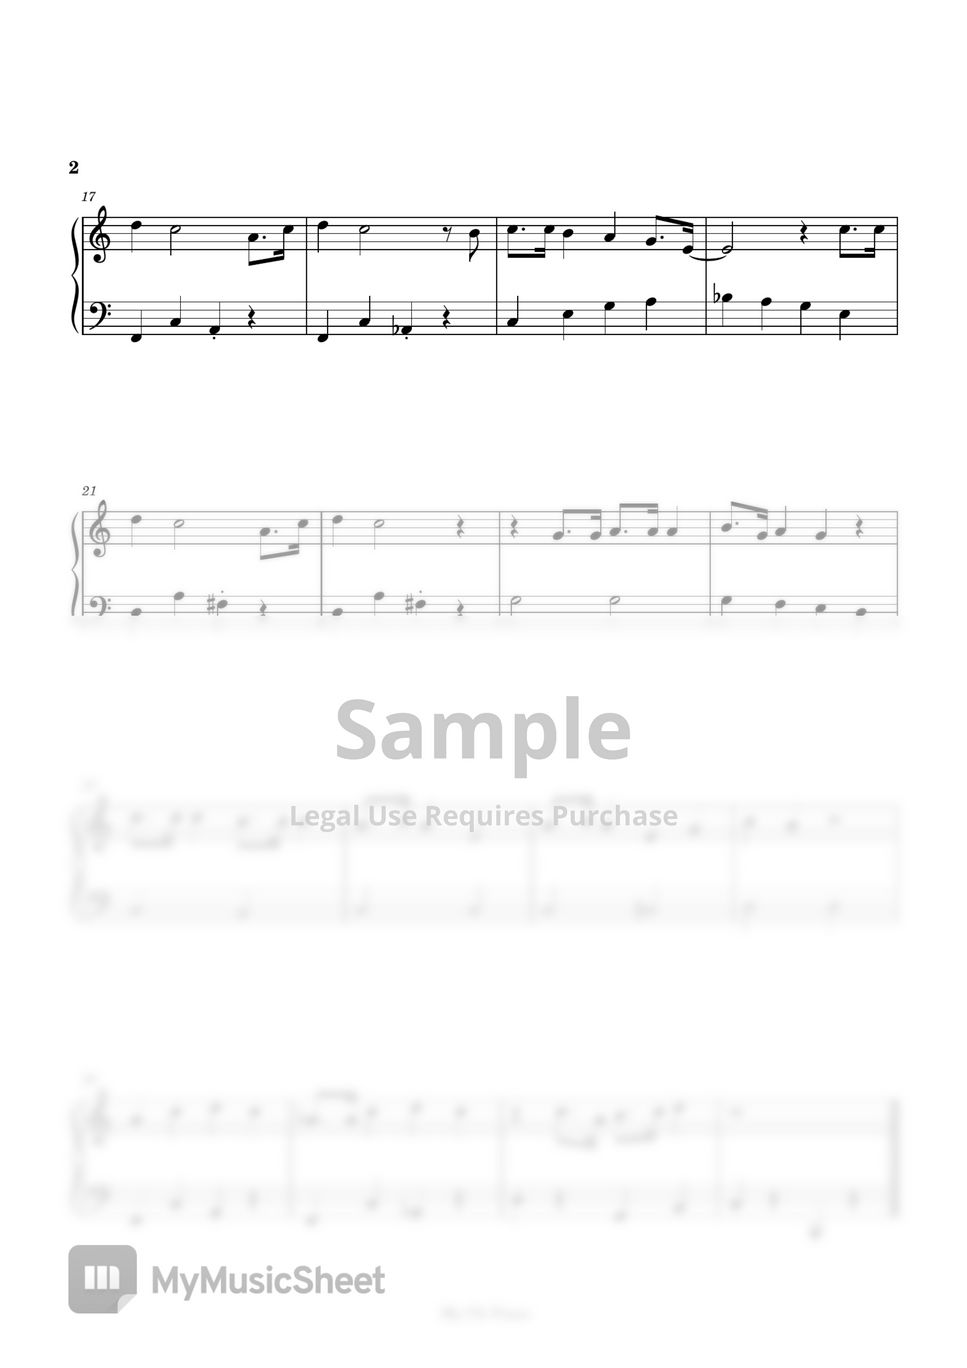 Bobby Helms - Jingle bell rock (쉬운피아노악보, C Key) by My Uk Piano